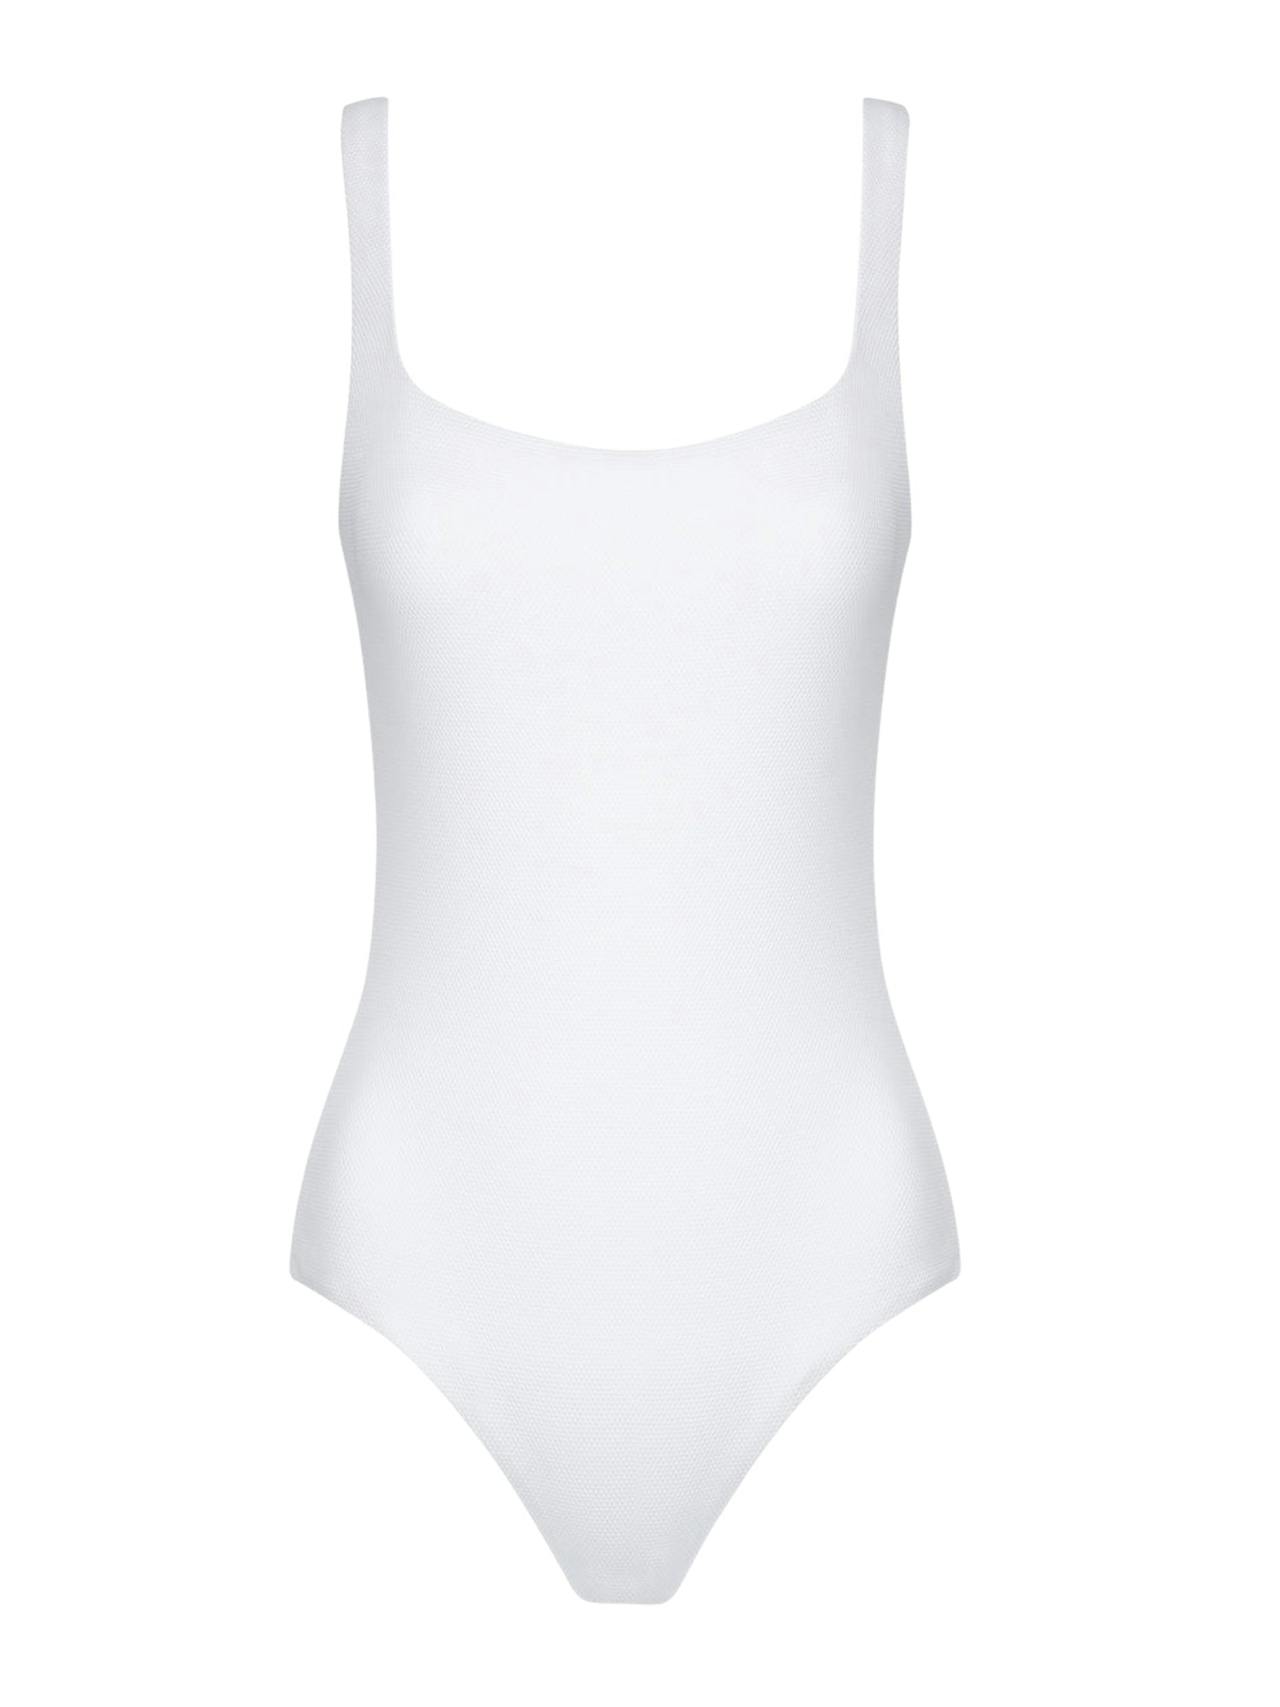 White Poppy scooped swimsuit